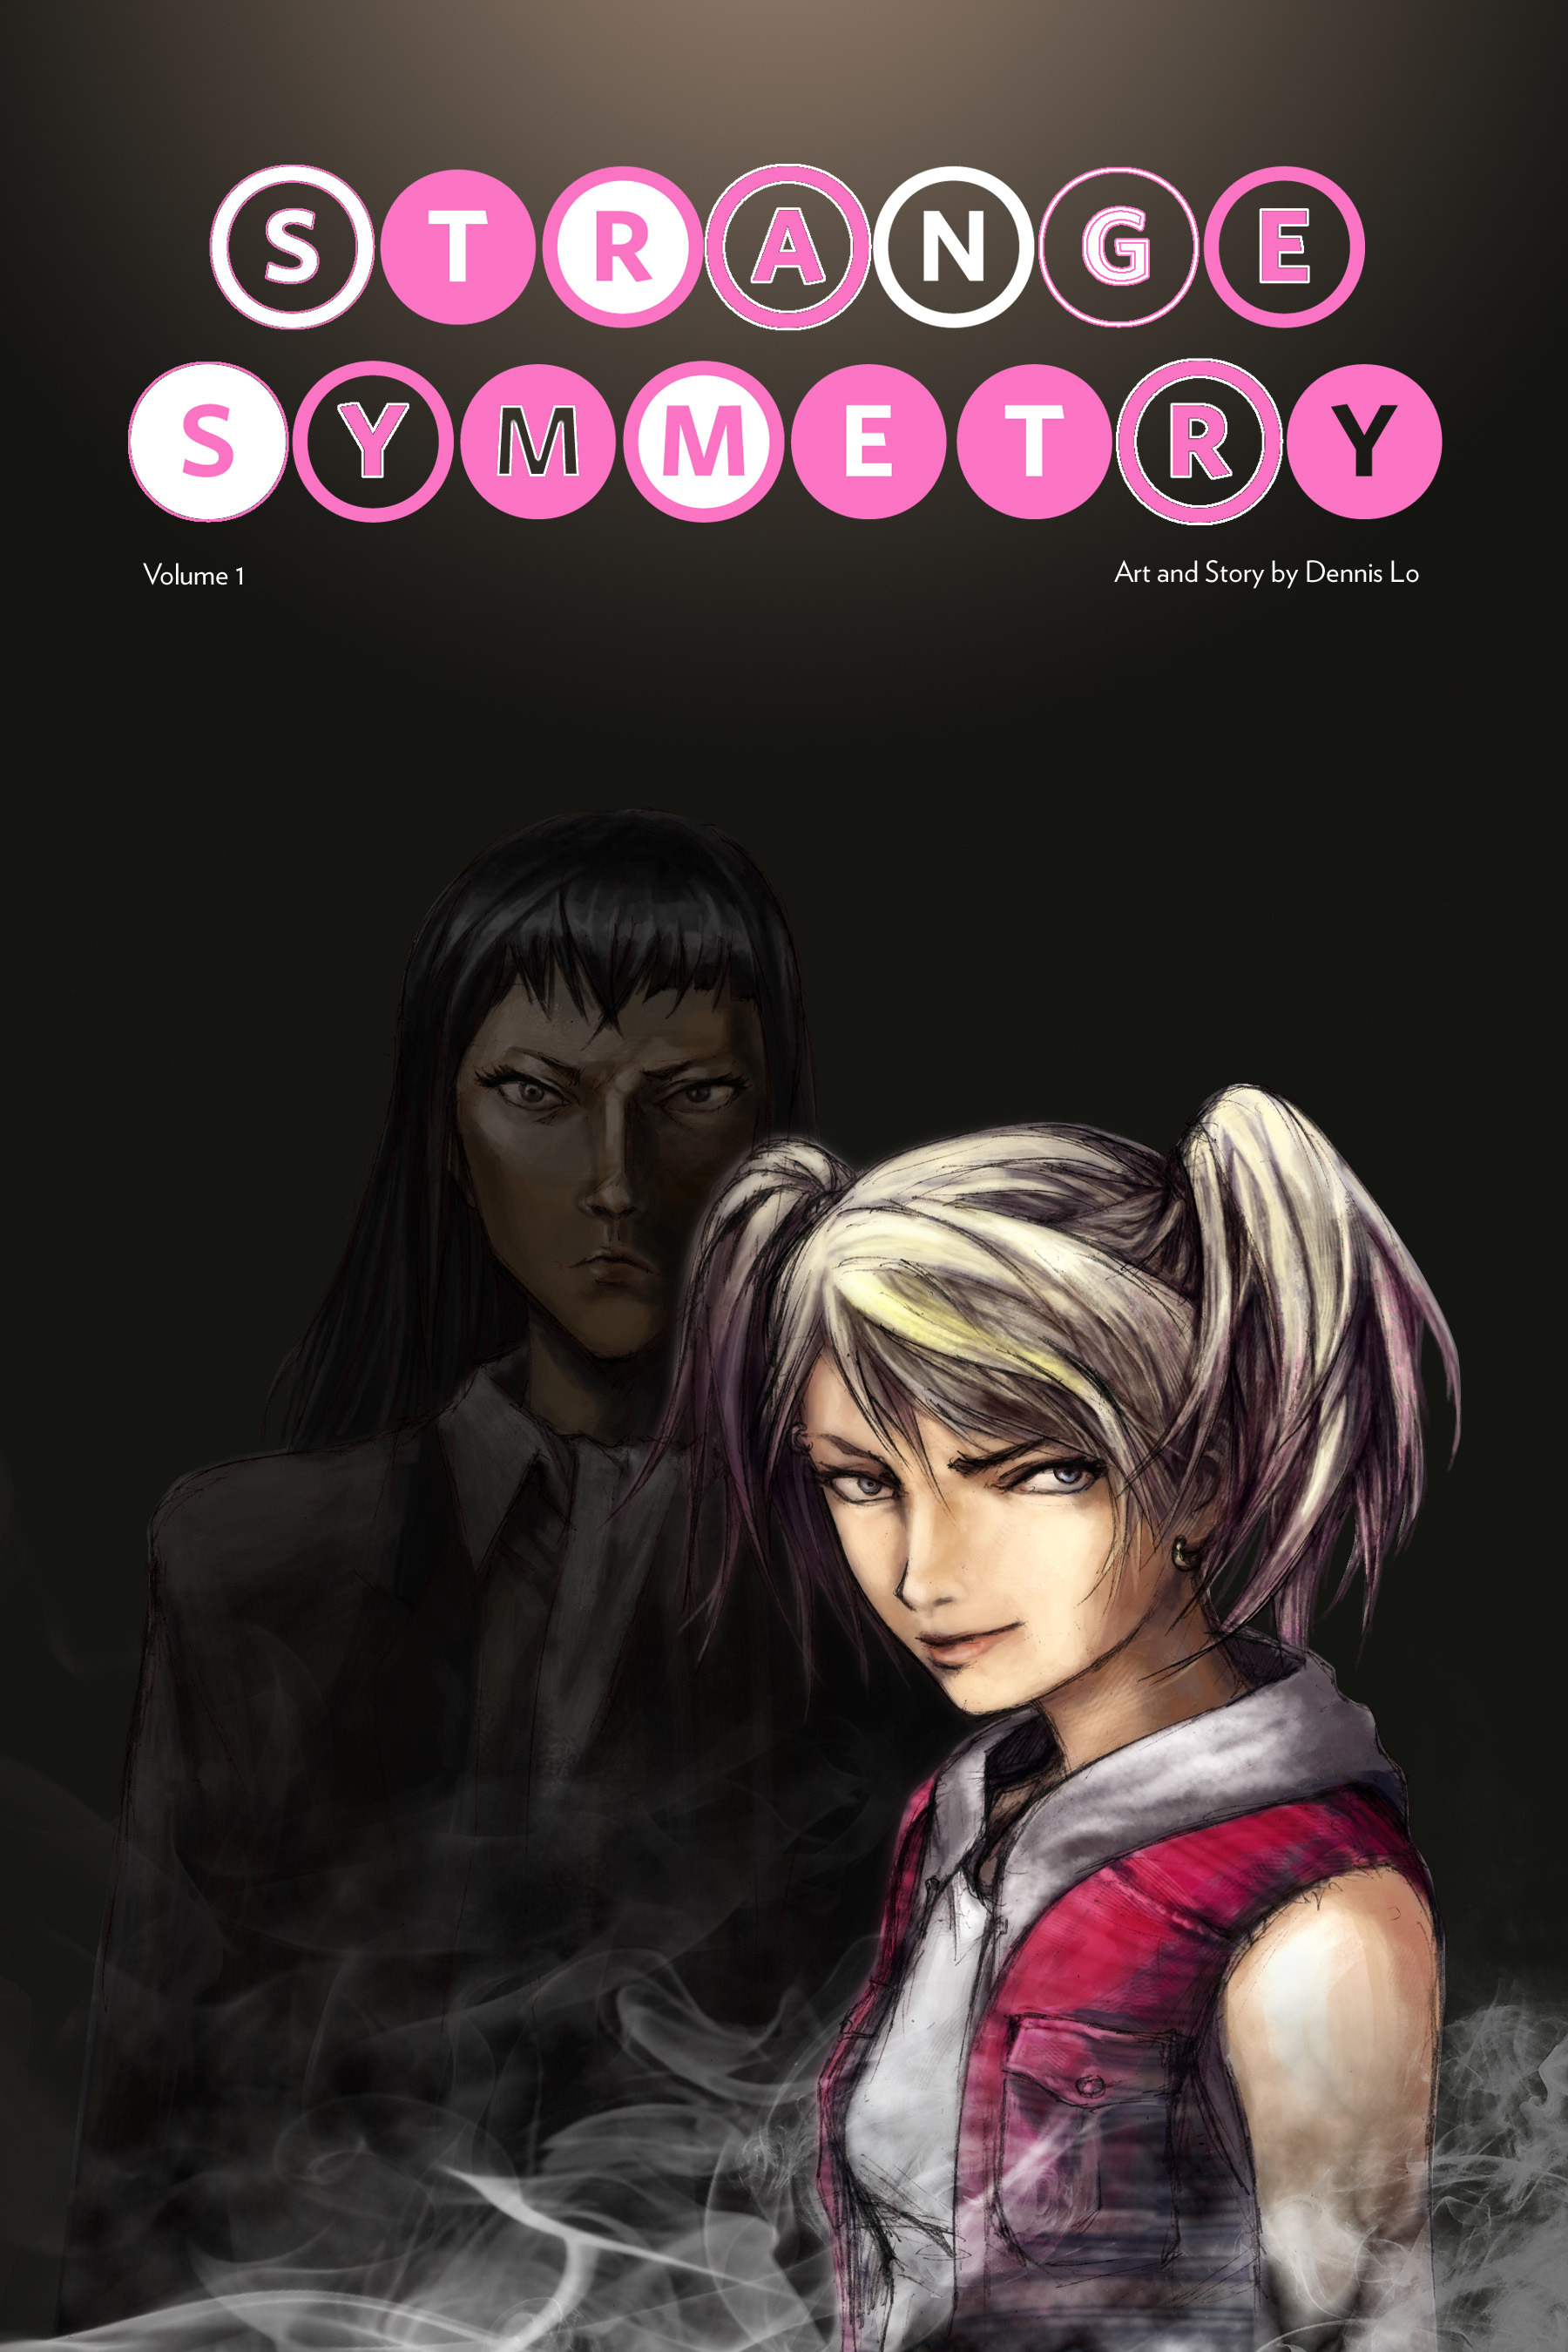 Read online Strange Symmetry comic -  Issue #4 - 1